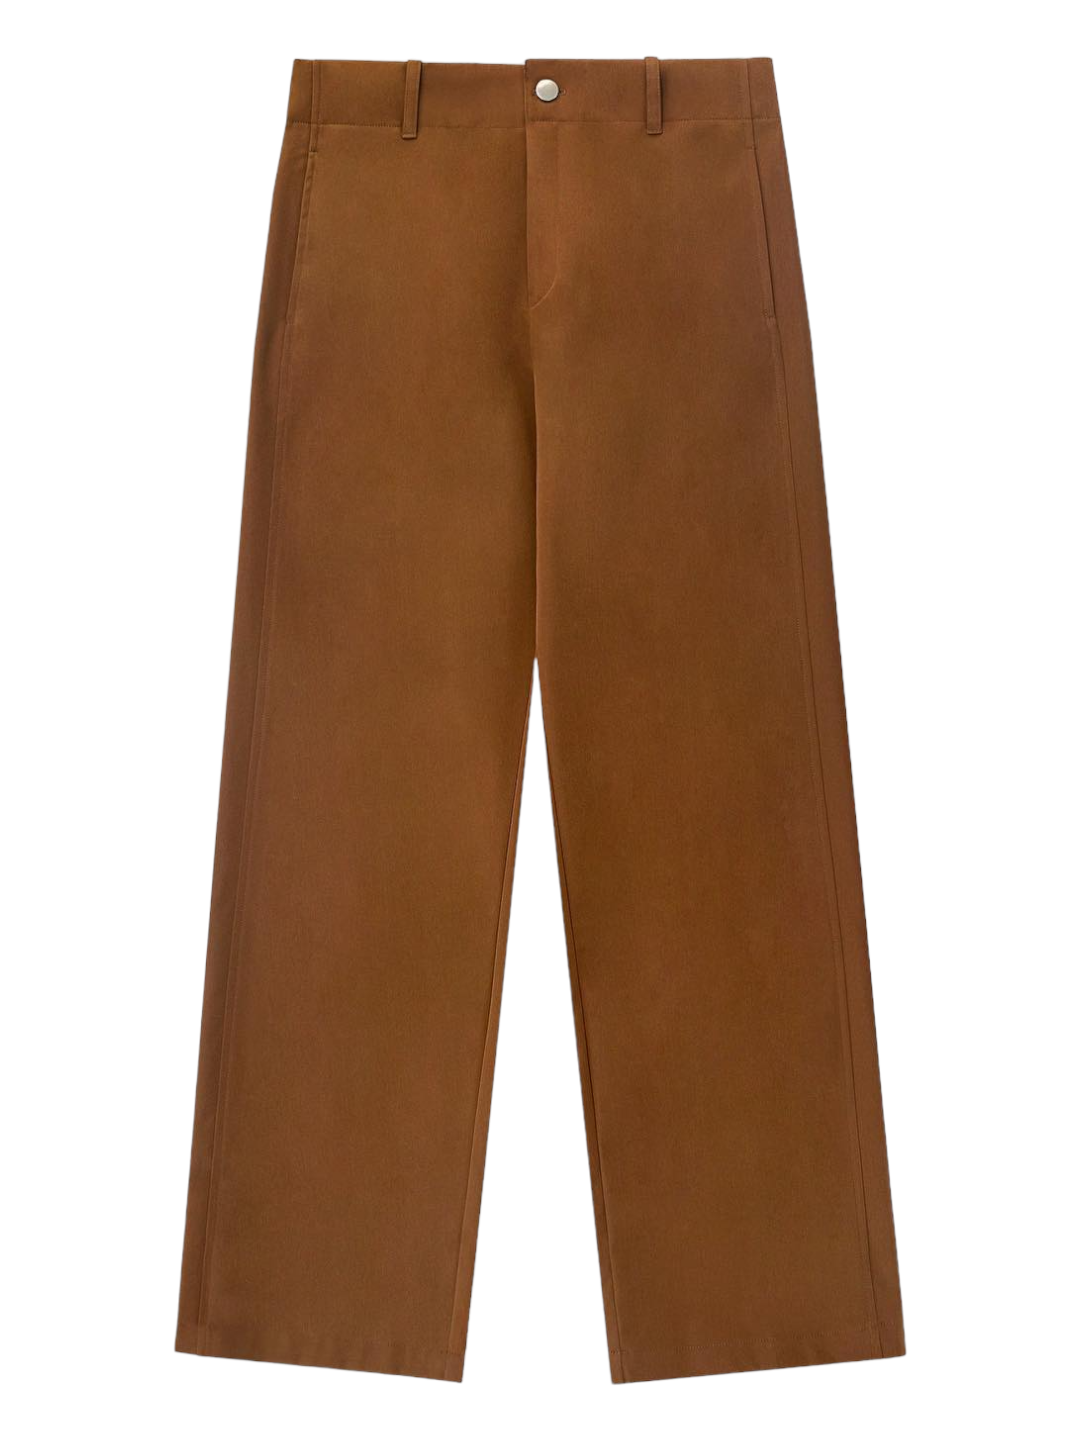 New Wide Pants (Brown)